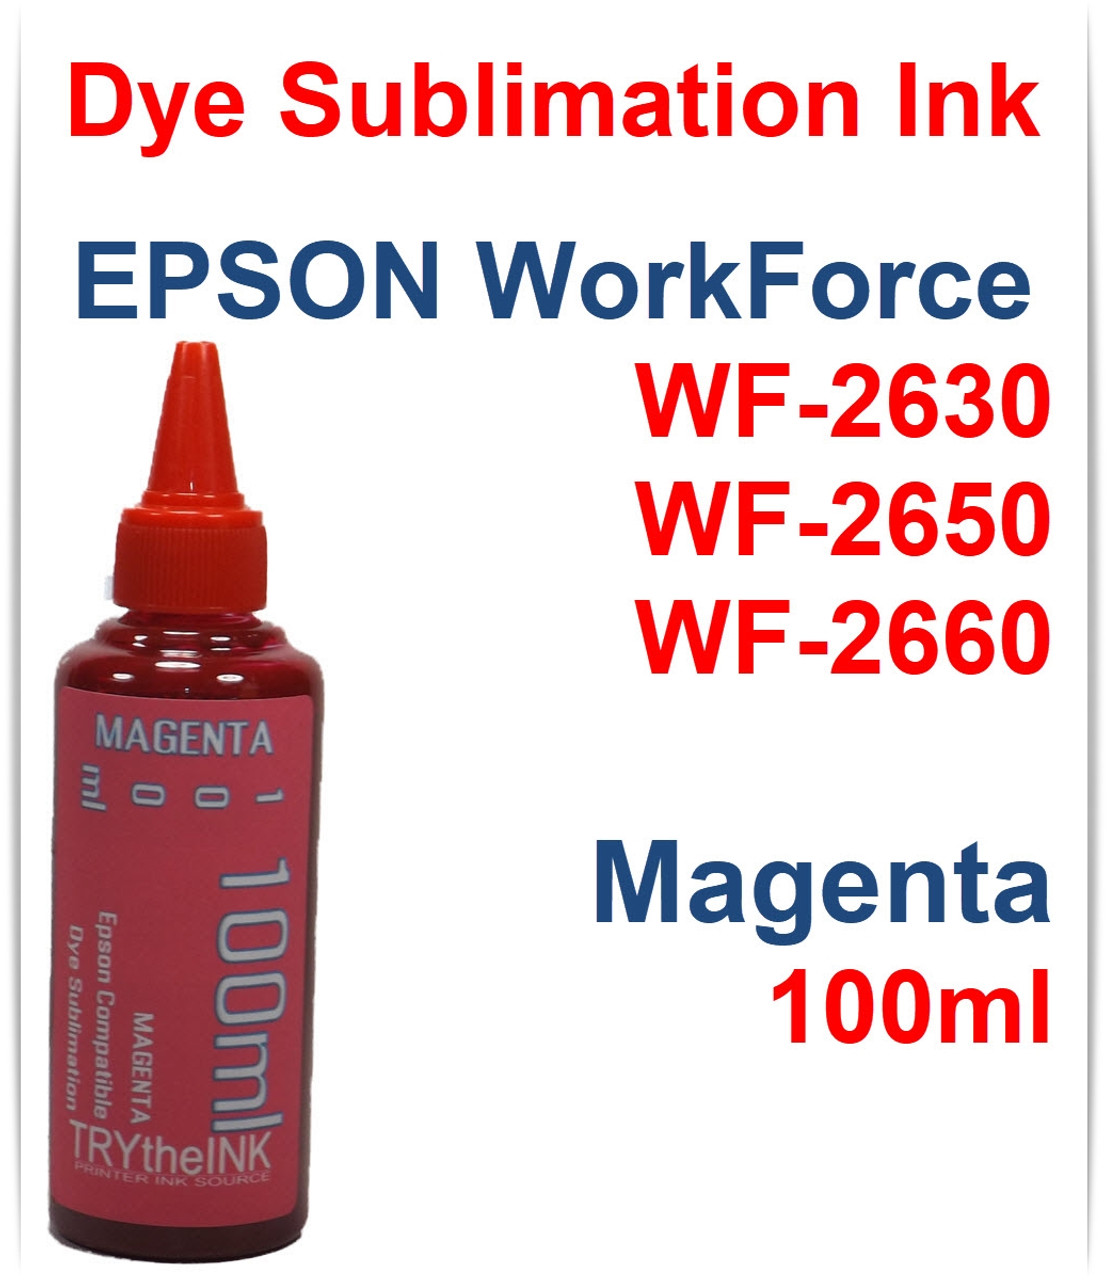 Magenta 100ml bottle Dye Sublimation Ink for Epson WorkForce WF-2630 WF-2650 WF-2660 Printers